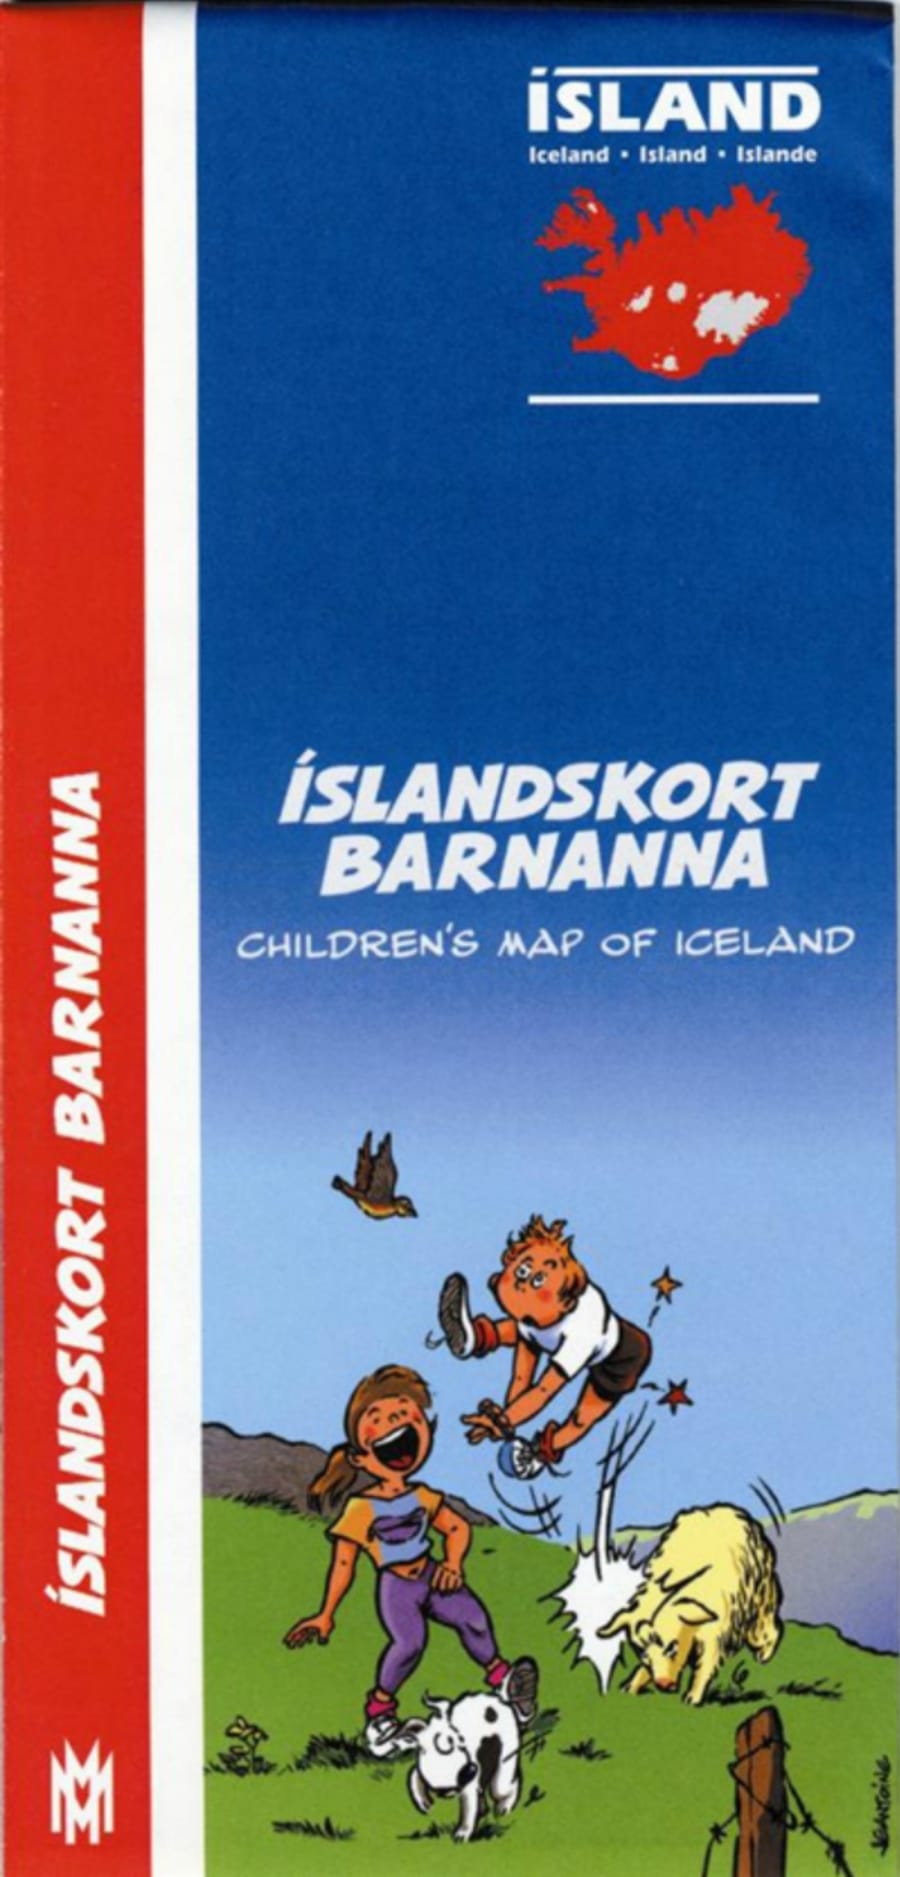 Íslandskort barnanna